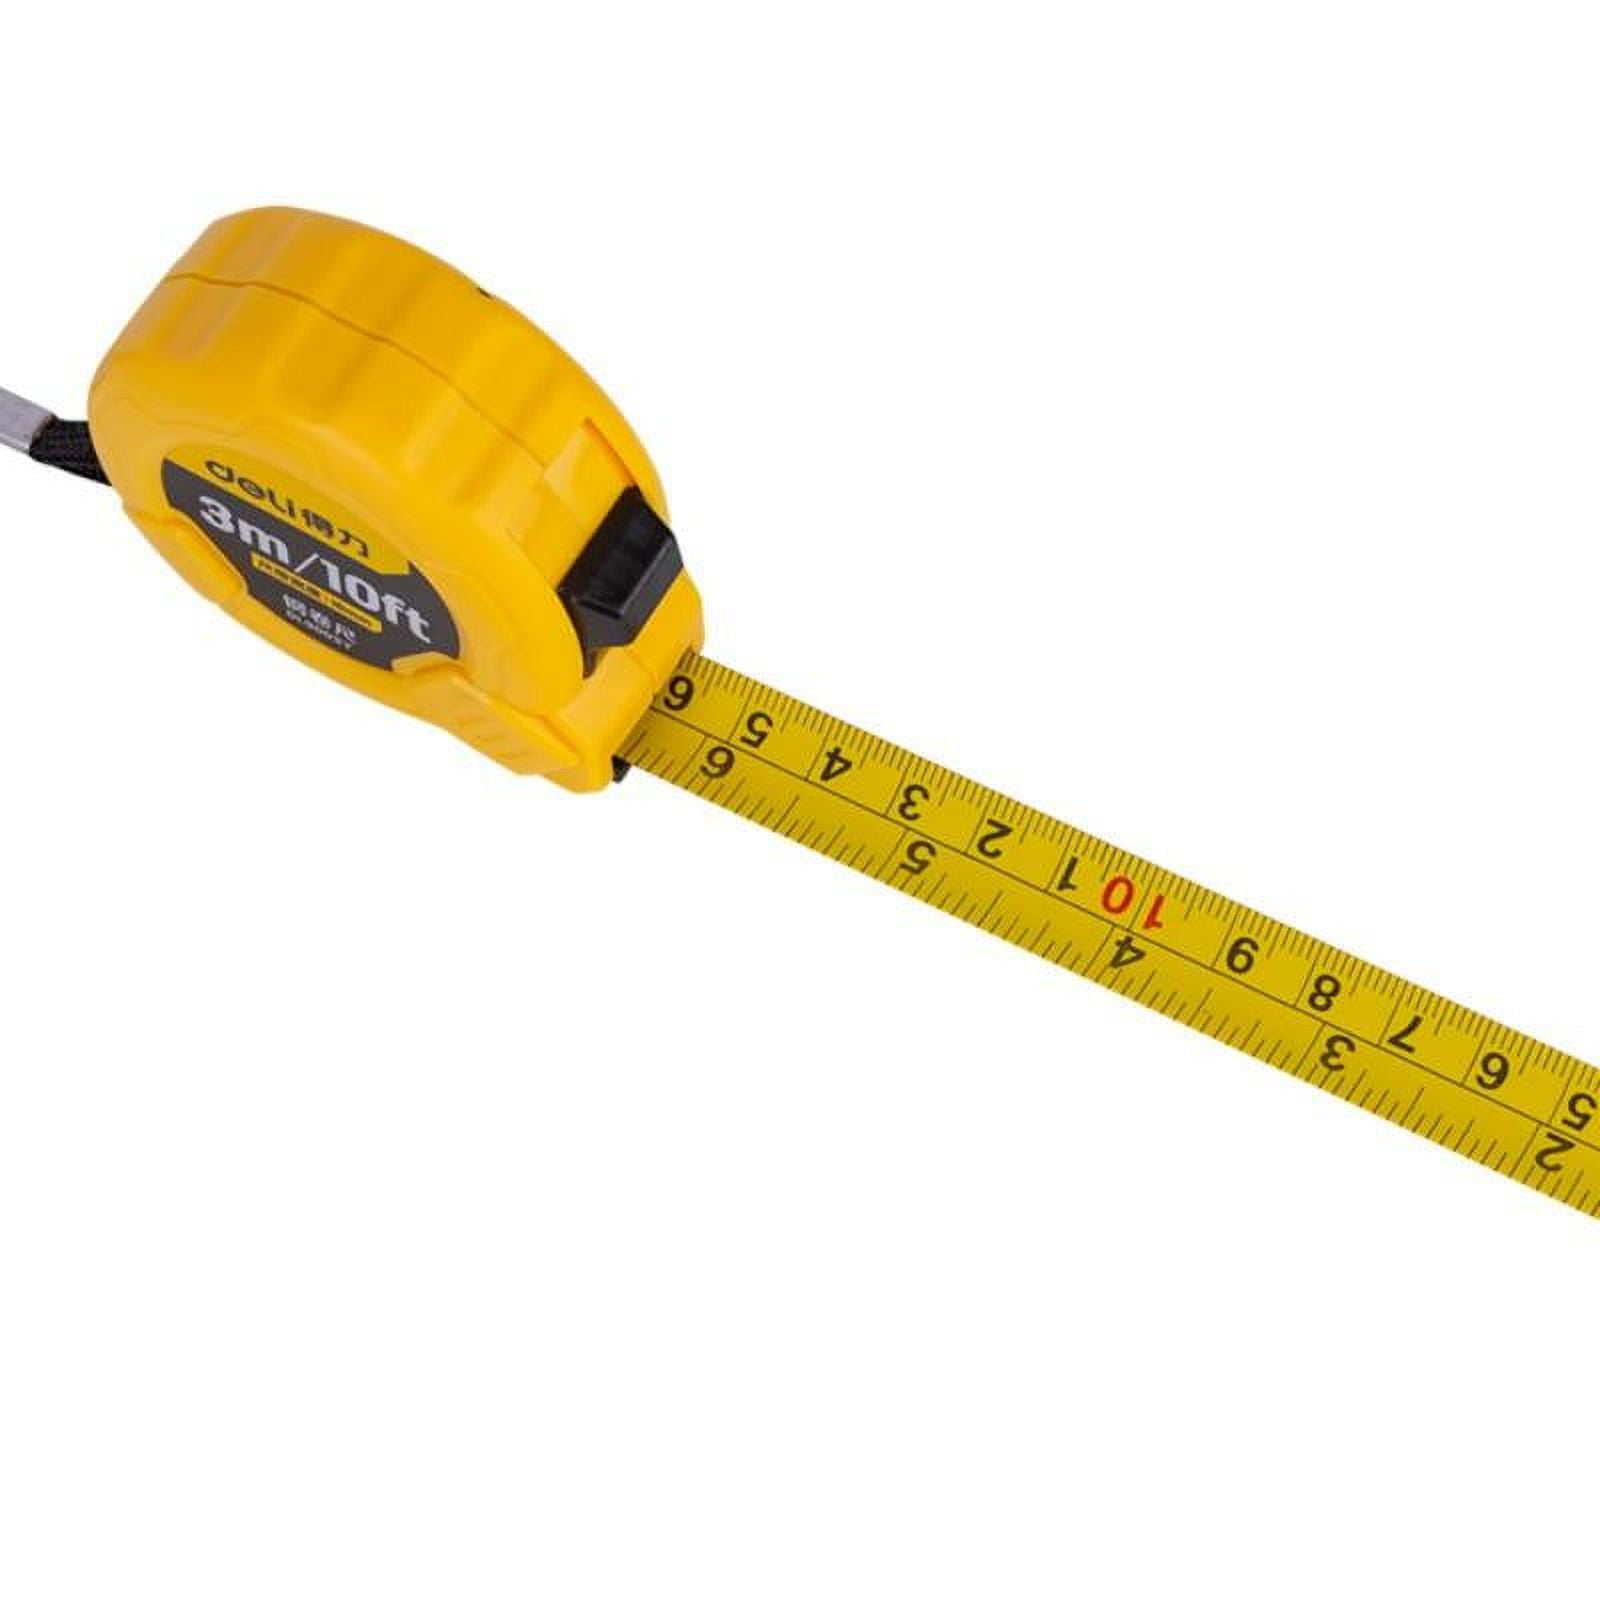 Benchmark HG Series 16 Foot Tape Measure - Measuring Tapes - 4